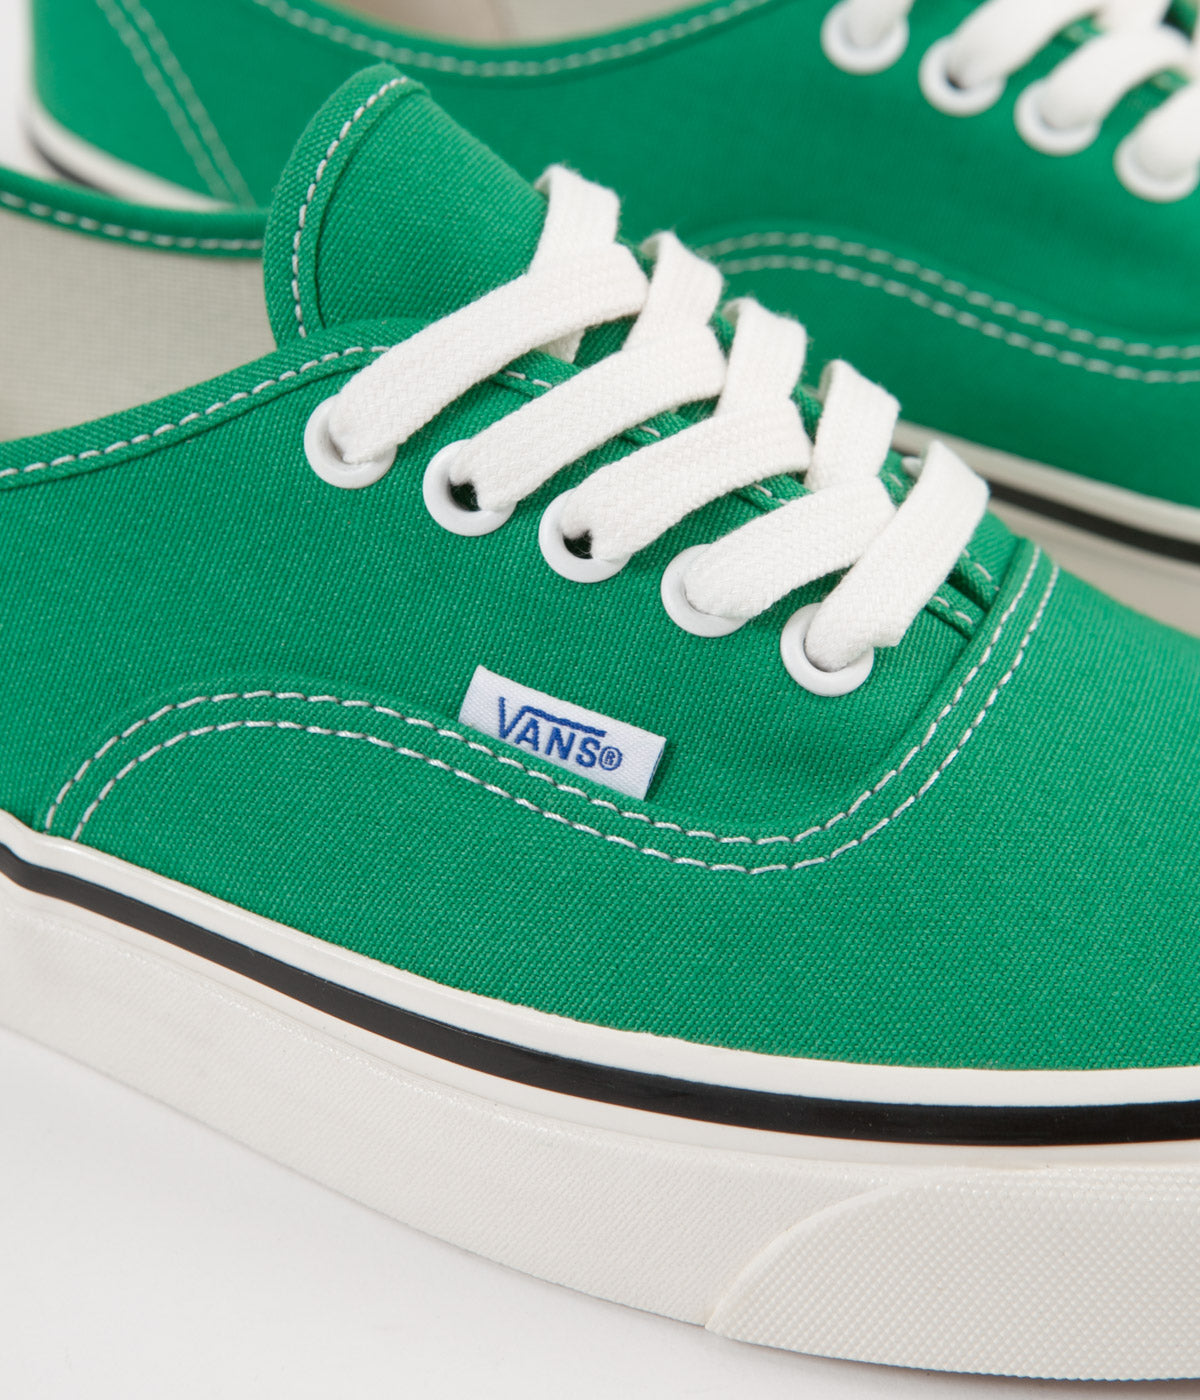 Vans Authentic 44 DX Anaheim Factory Shoes - OG Emerald Green | Always ...